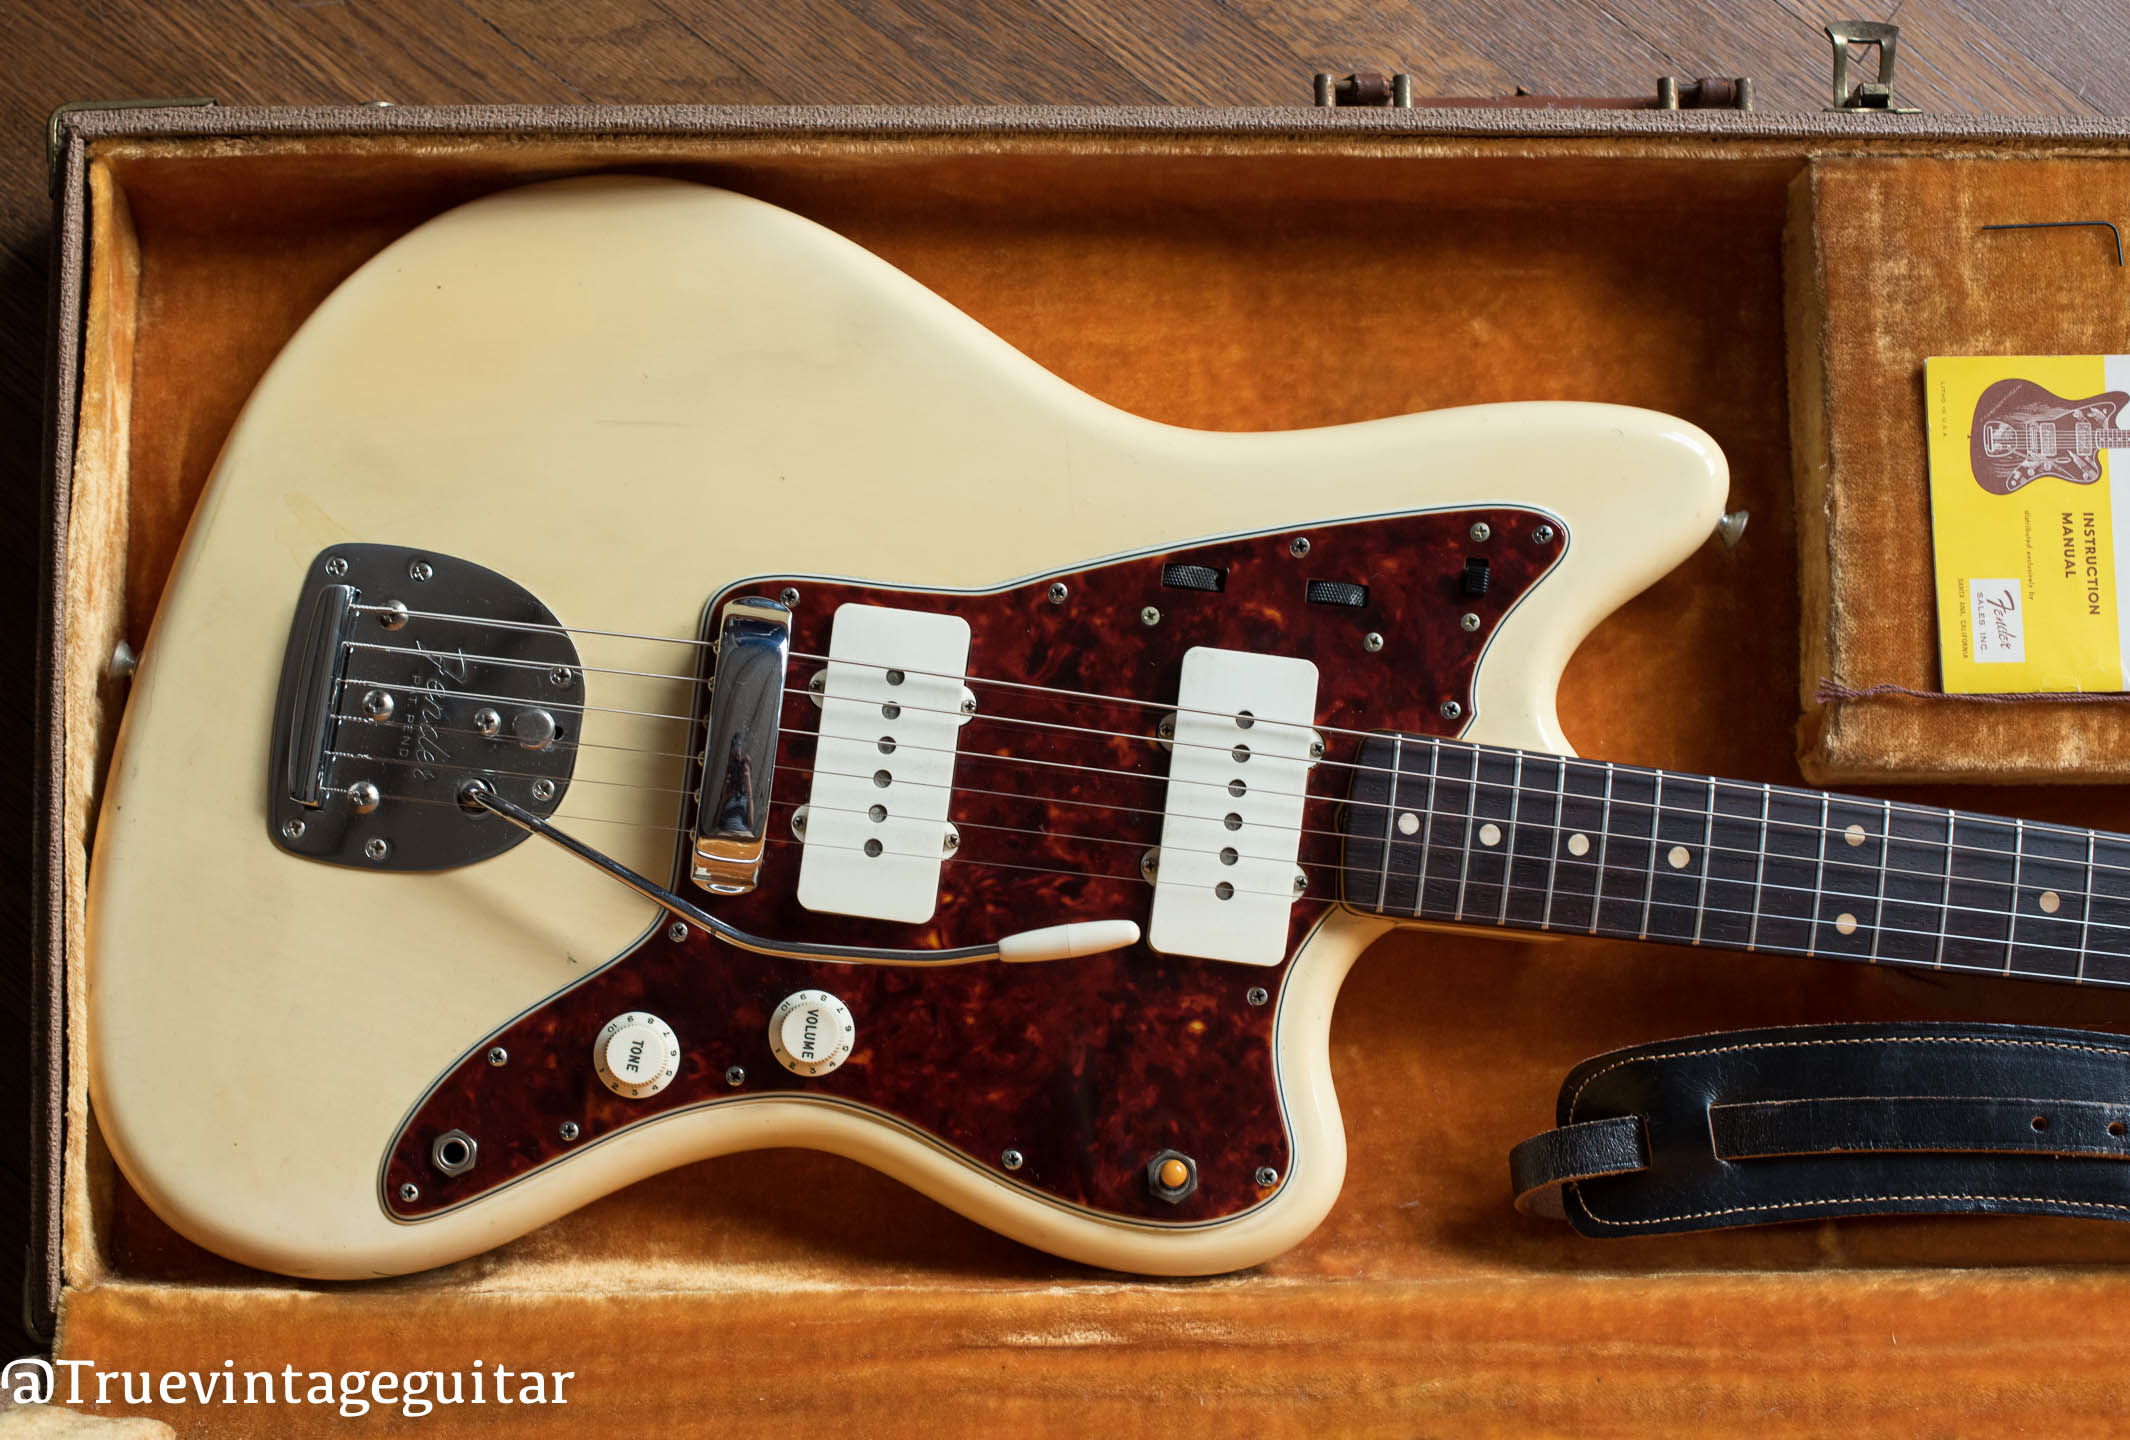 1961 Fender Jazzmaster Guitar, Blond finish over Ash body in original case